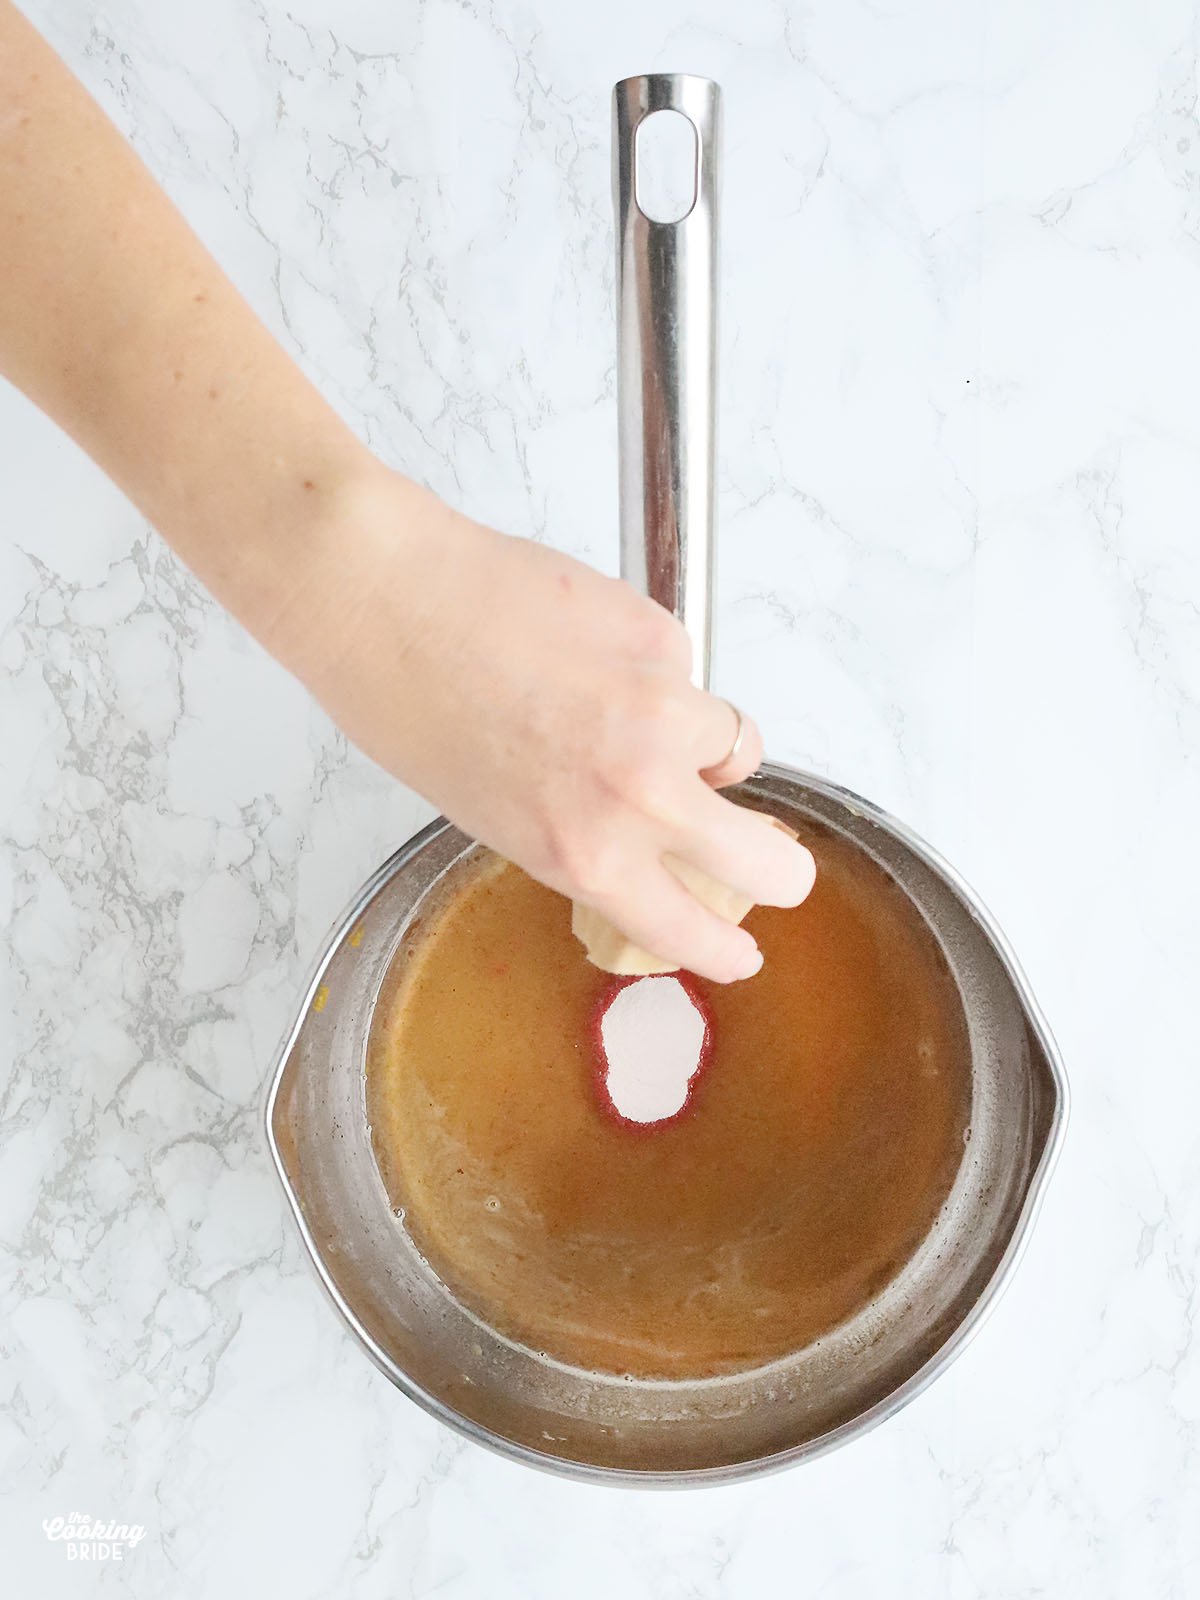 hand pouring peach gelatin into a saucepan